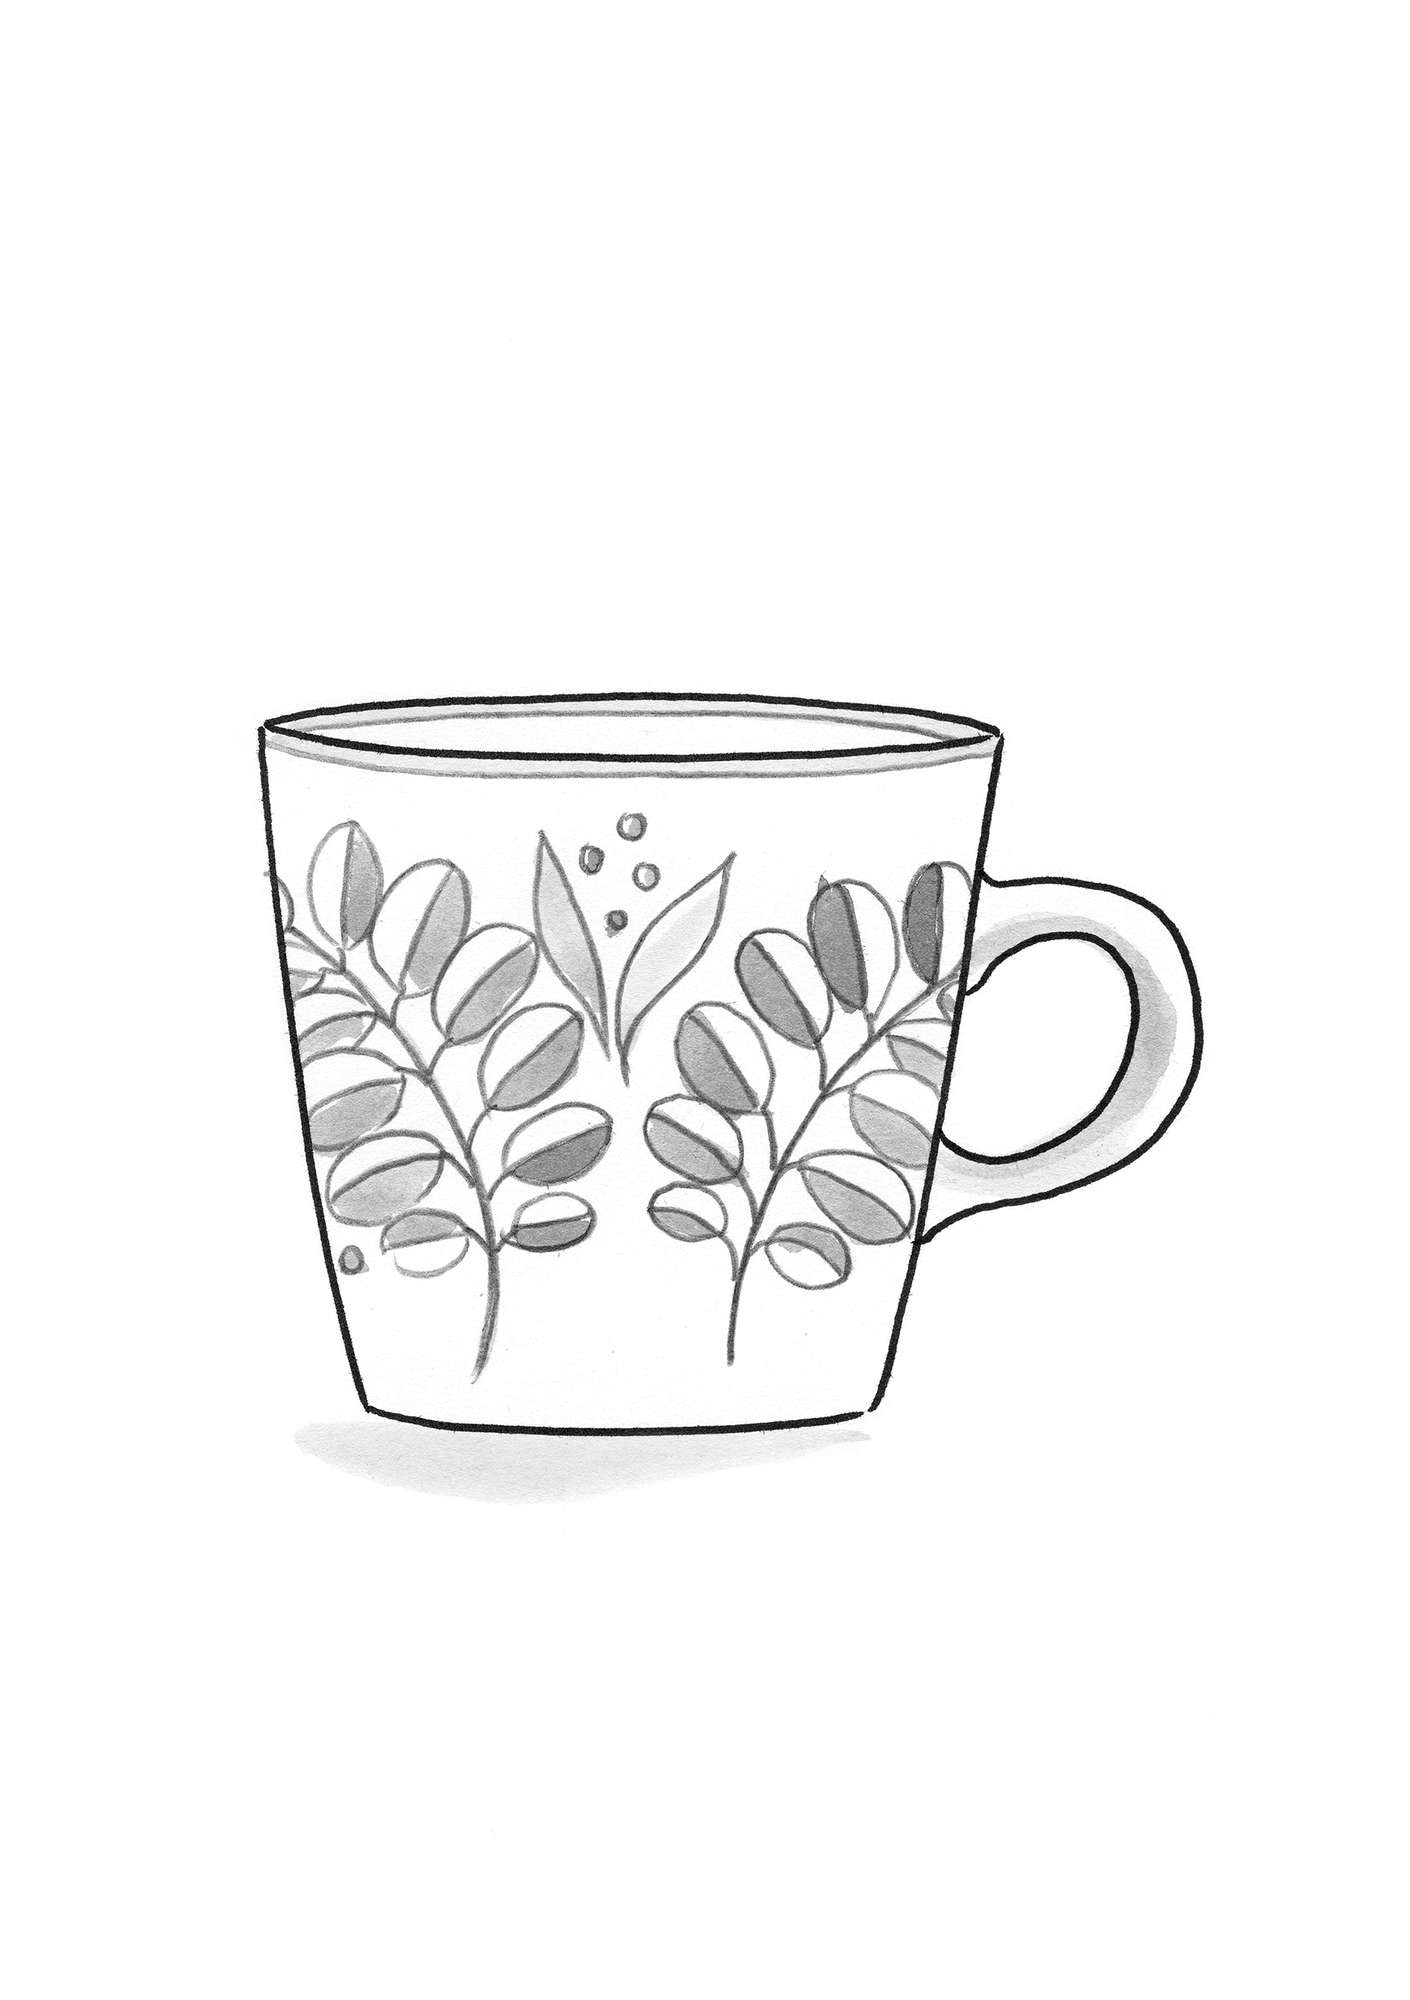 “Meadow” ceramic mug meadow stream